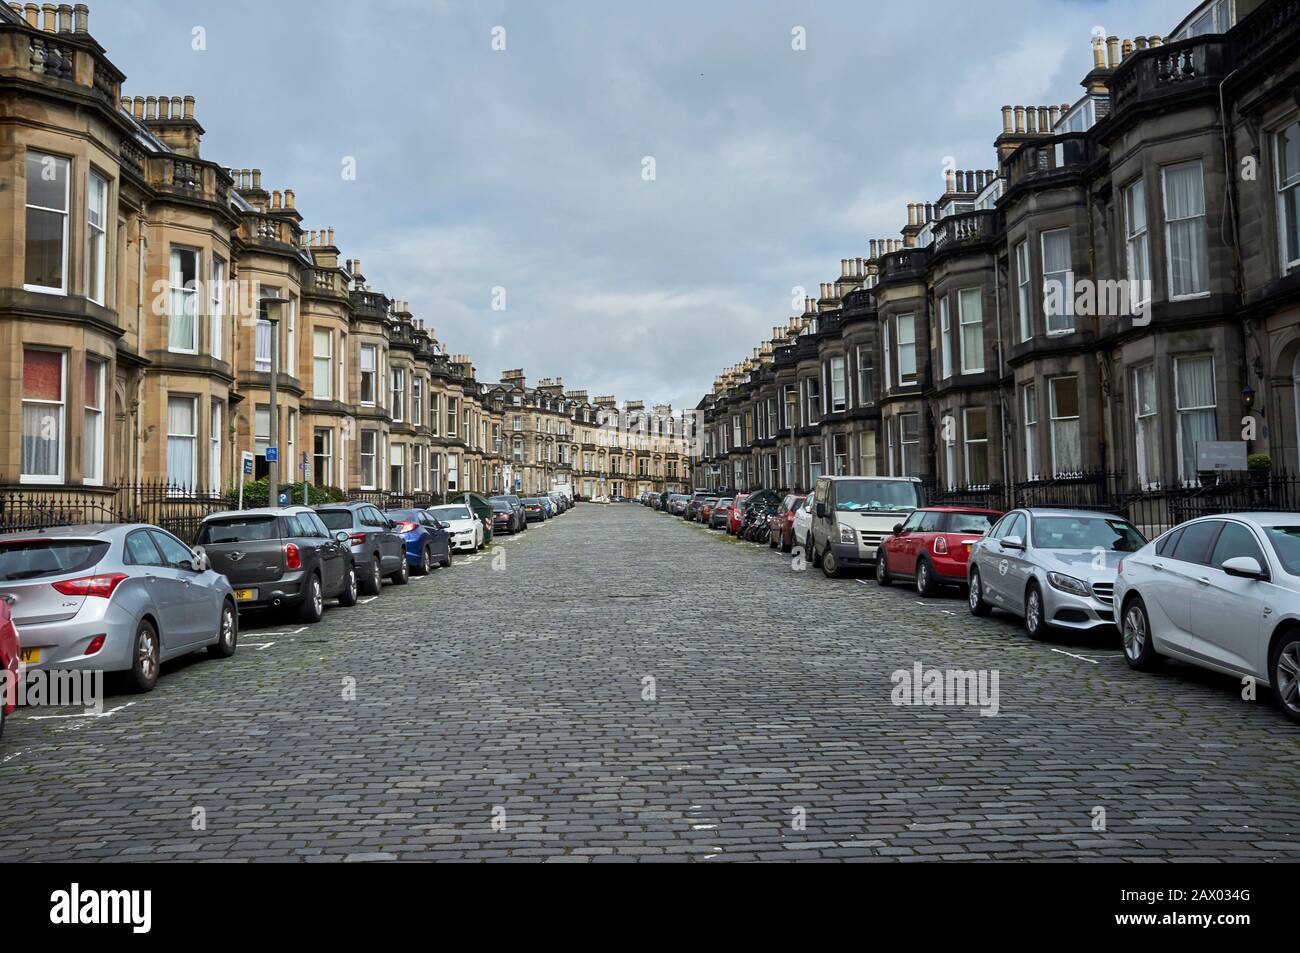 Street scene in Haymarket, Edinburgh new town, Scotland, UK Stock Photo